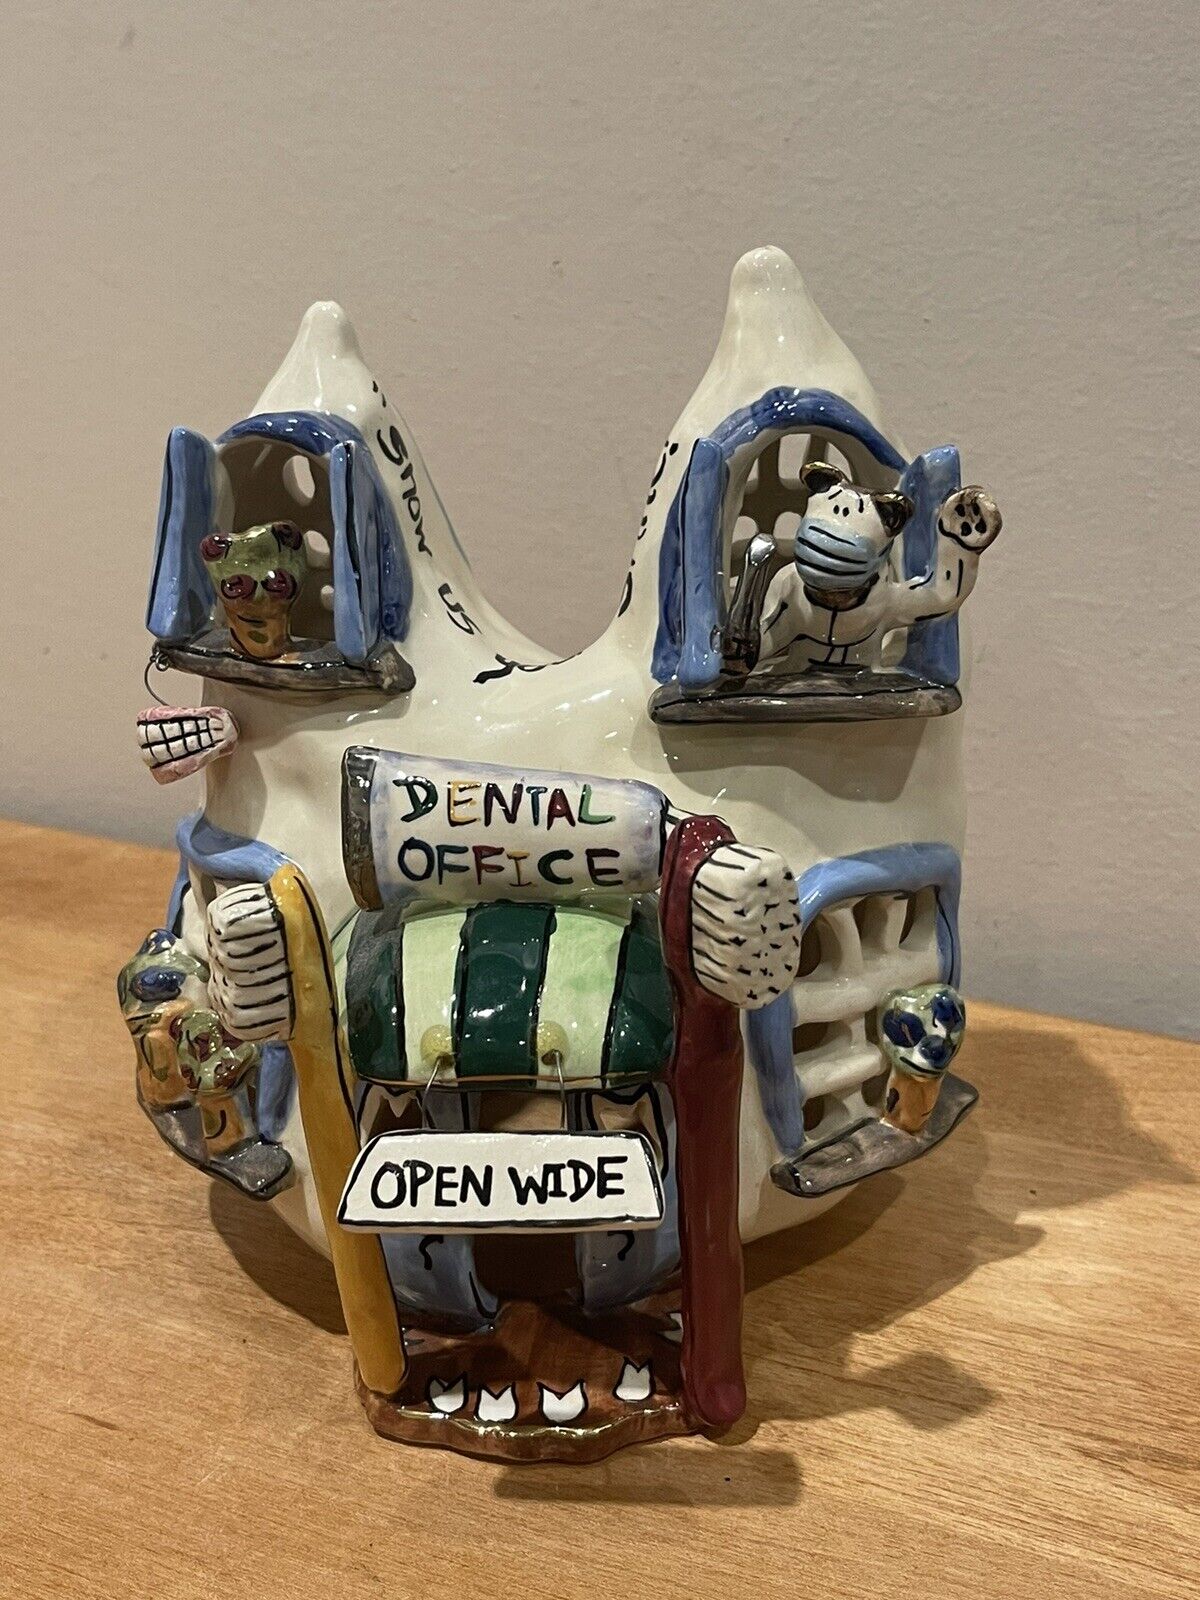 Blue Sky CLAY-WORKS Goldminc Dentist Dental Office 2002 Ceramic, Humor, Kitsch